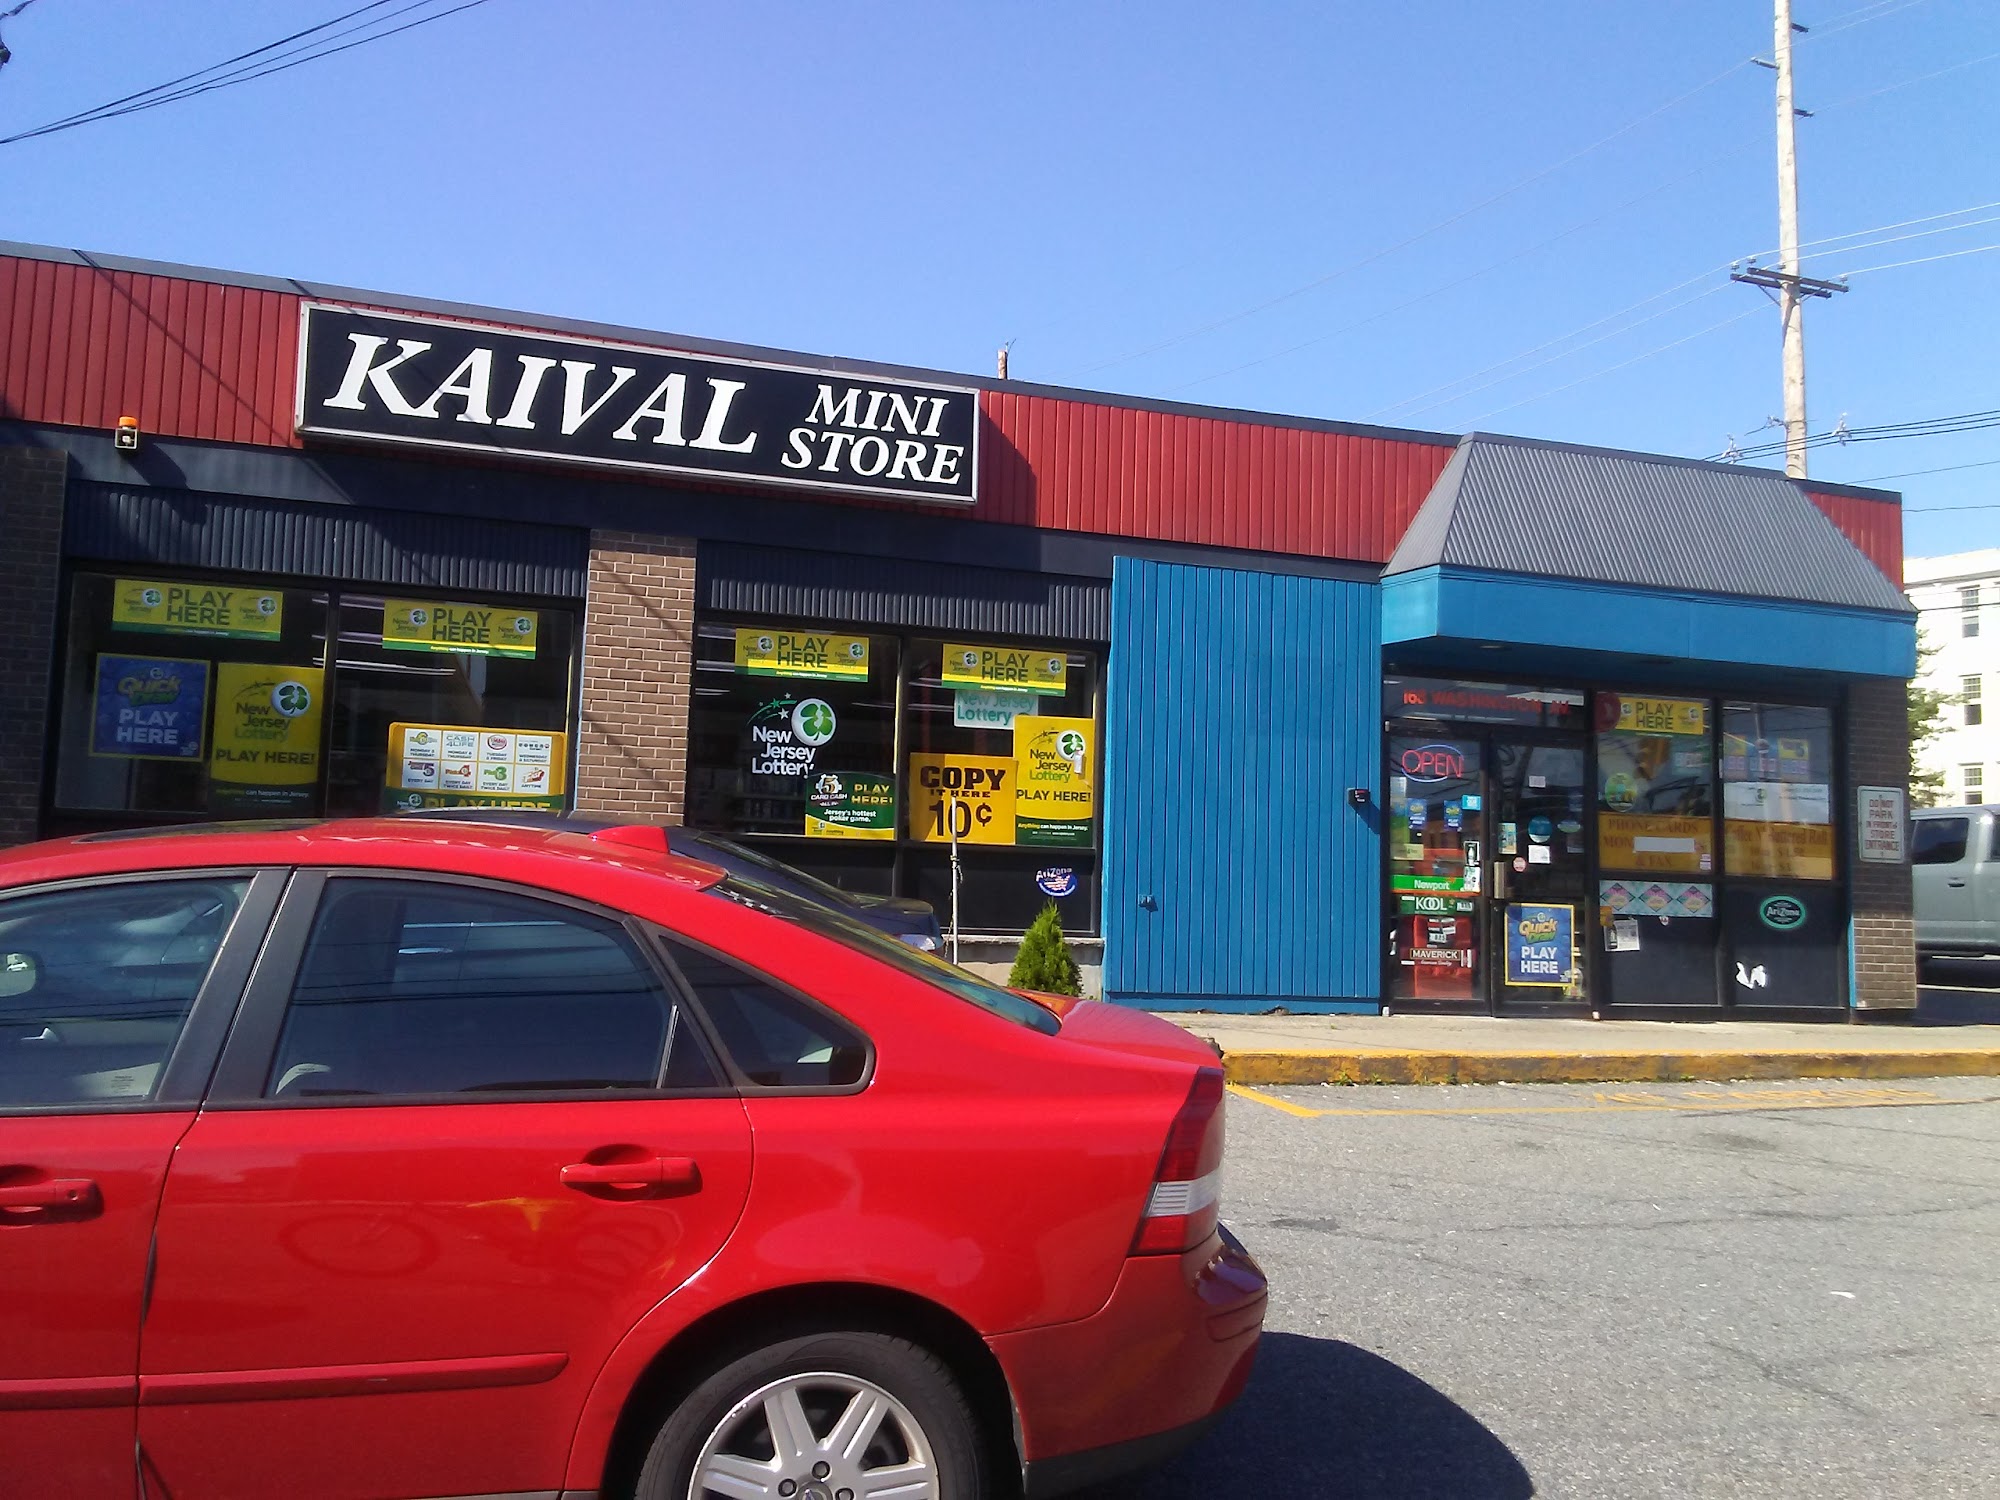 Kaival Mini Store